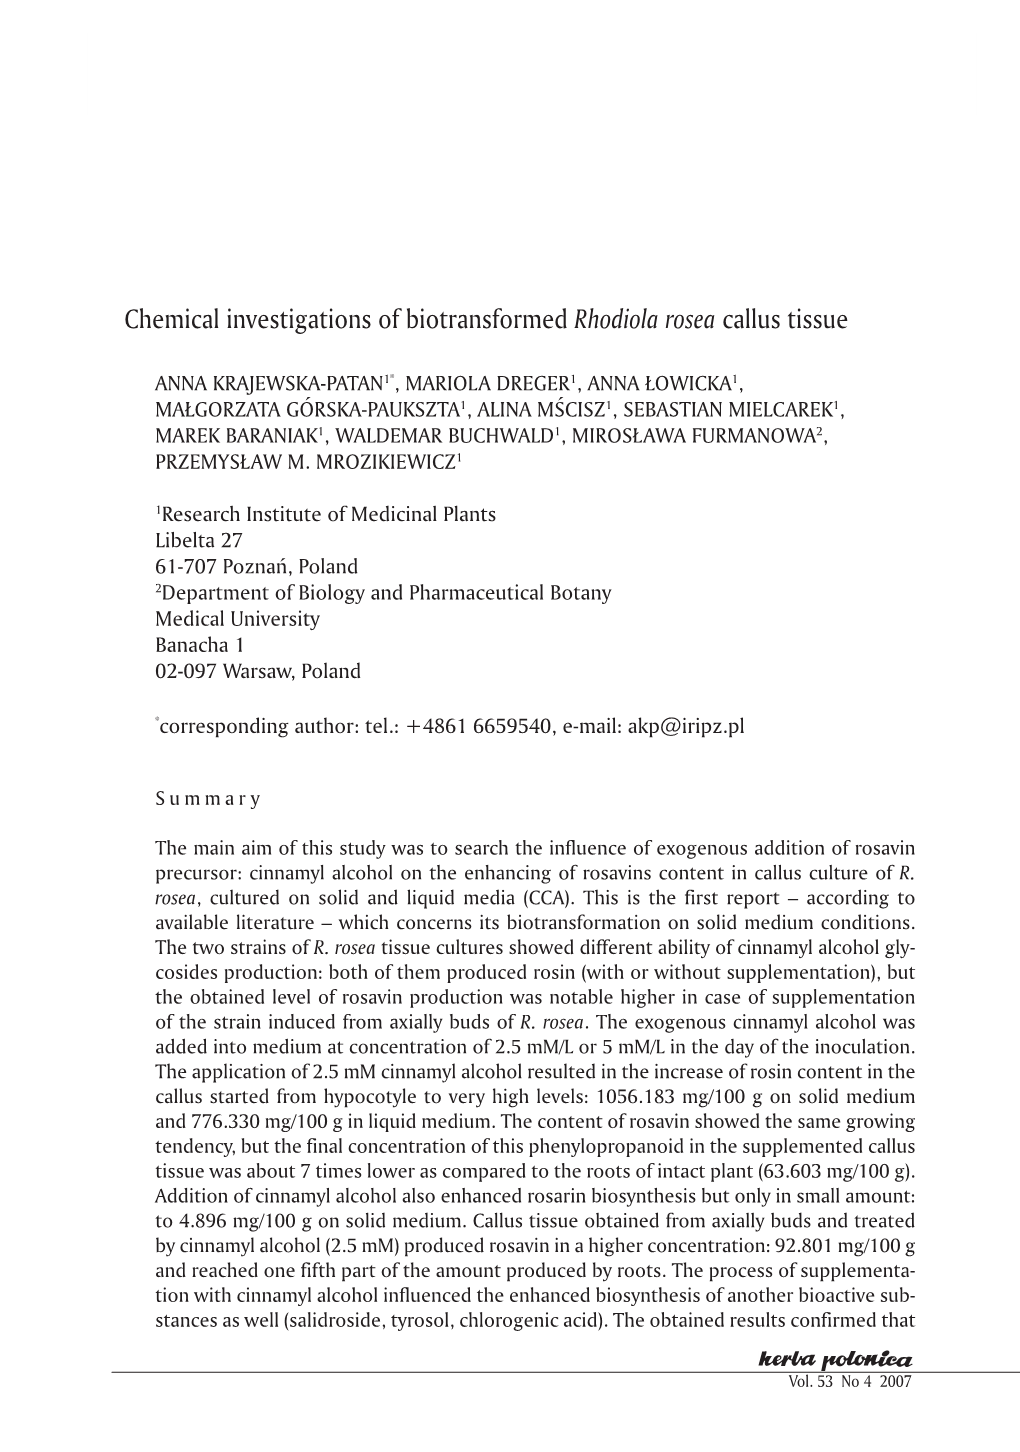 Chemical Investigations of Biotransformed Rhodiola Rosea Callus Tissue 77